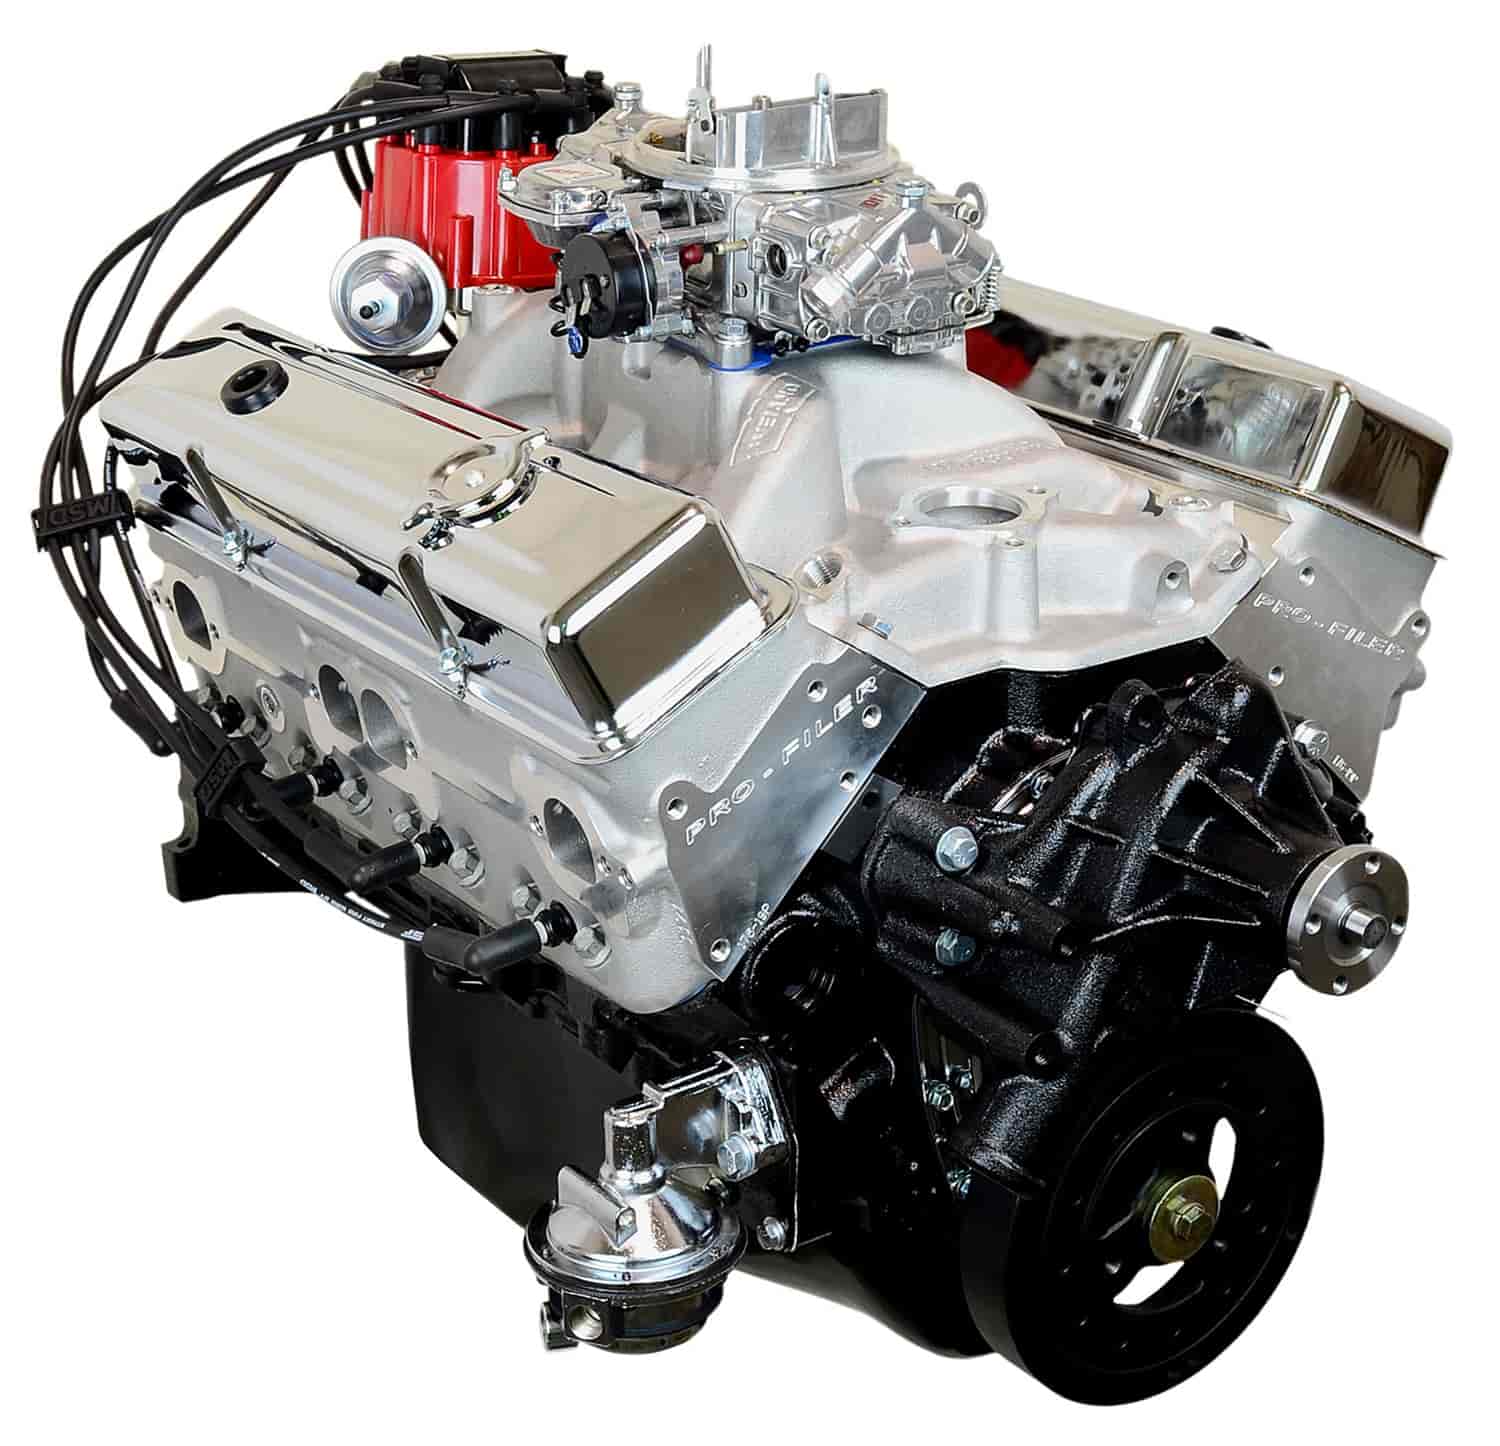 High Performance Crate Engine Small Block Chevy 383ci / 460HP / 490TQ